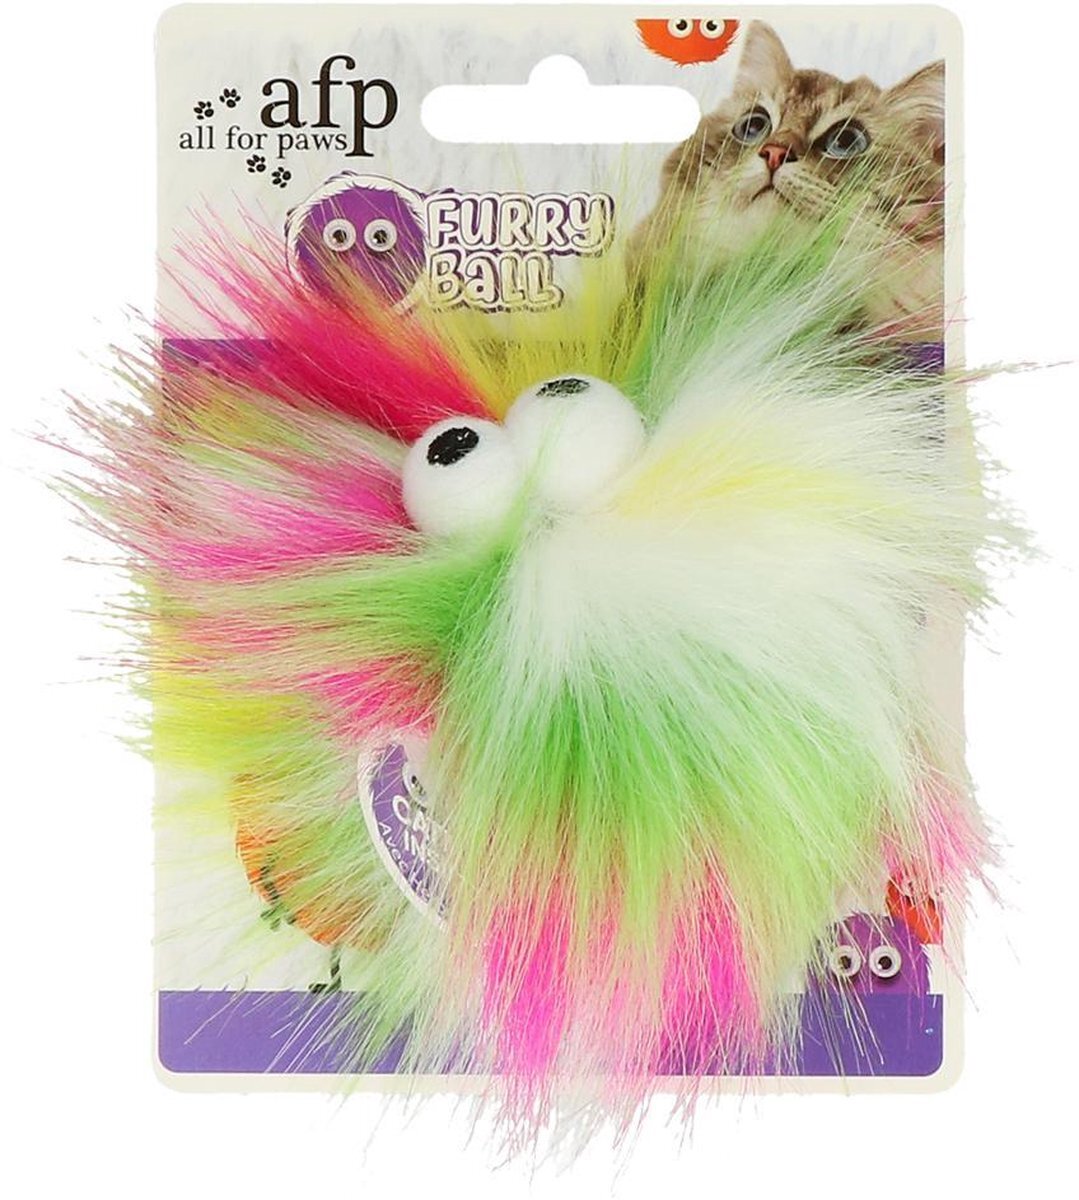 AFP Furry Fluffy Ball Yellow Speelgoed voor katten - Kattenspeelgoed - Kattenspeeltjes groen